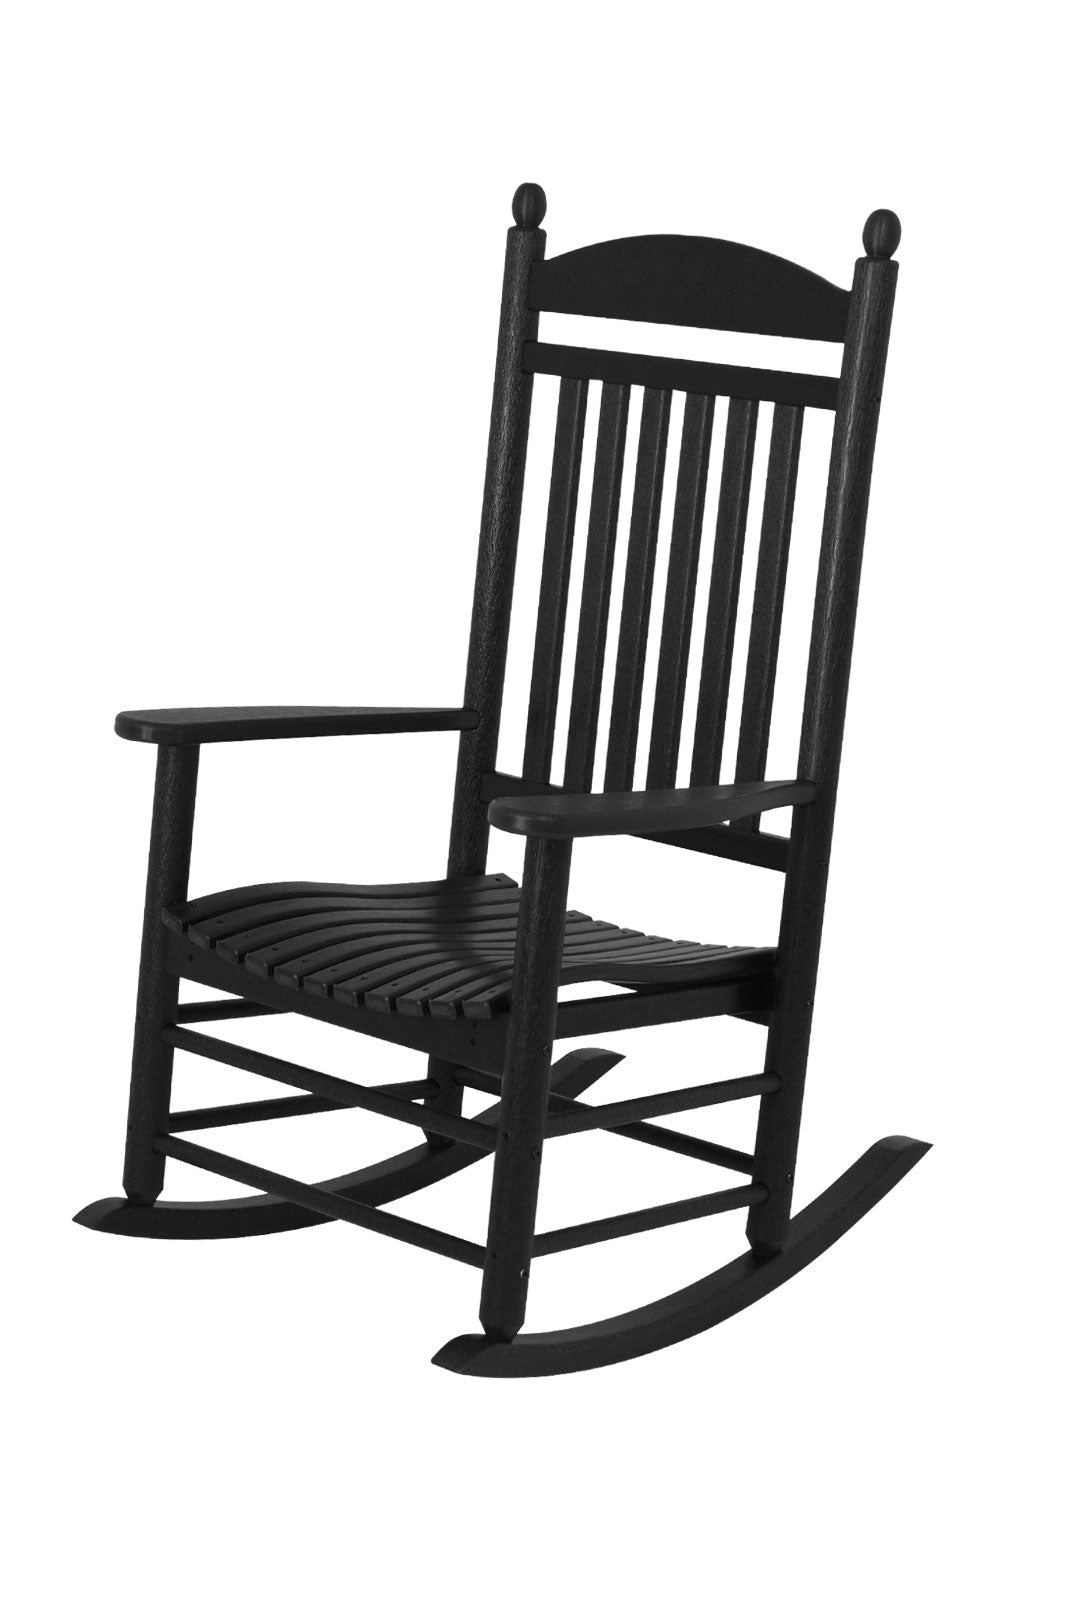 jefferson recycled plastic rocker chair black